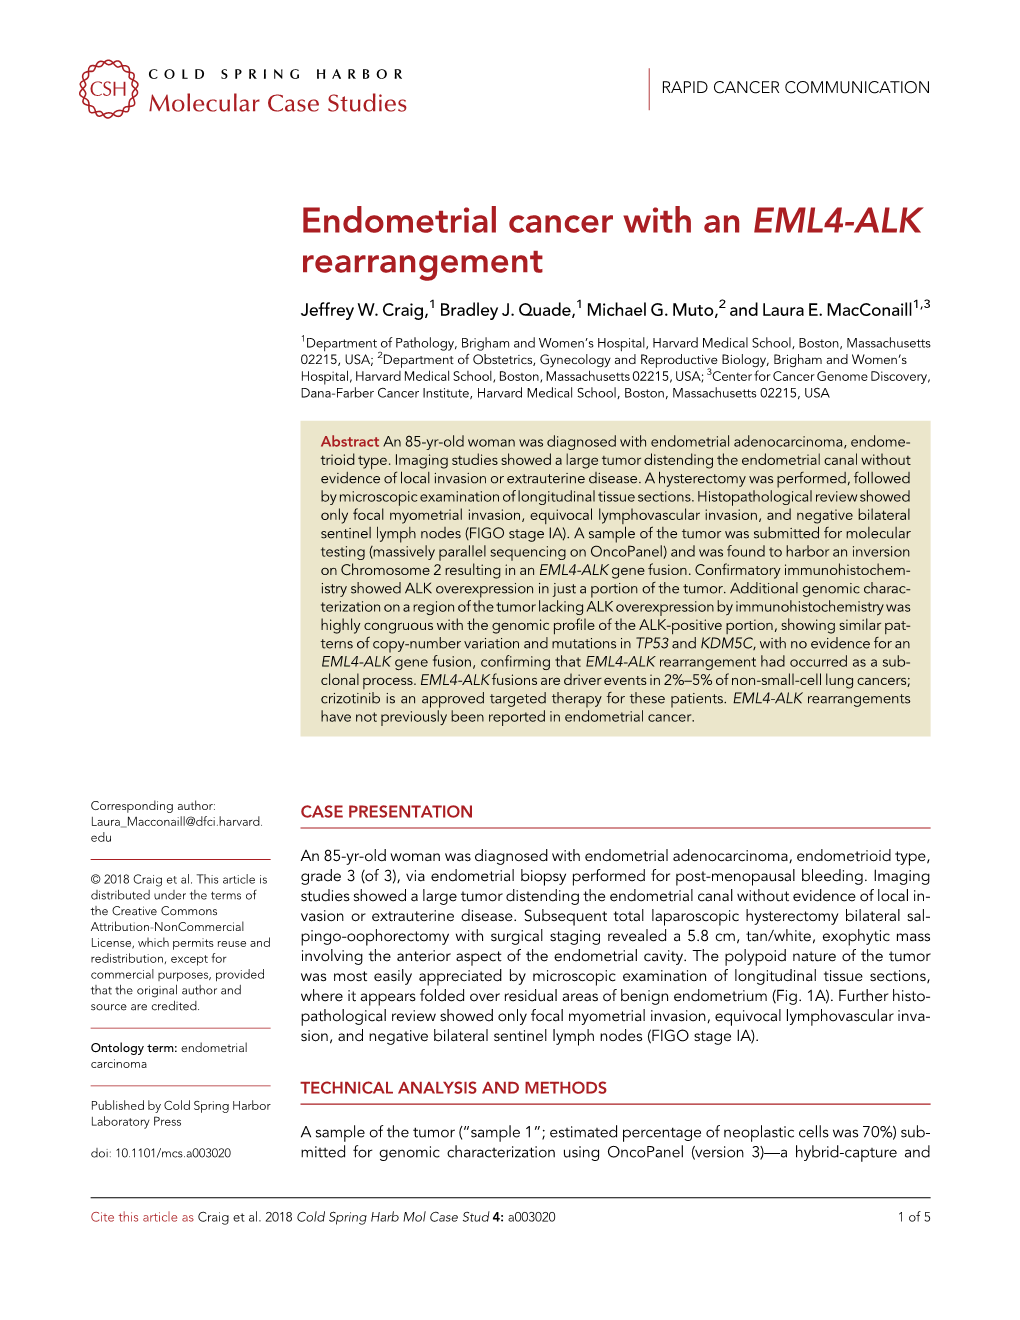 Endometrial Cancer with an EML4-ALK Rearrangement